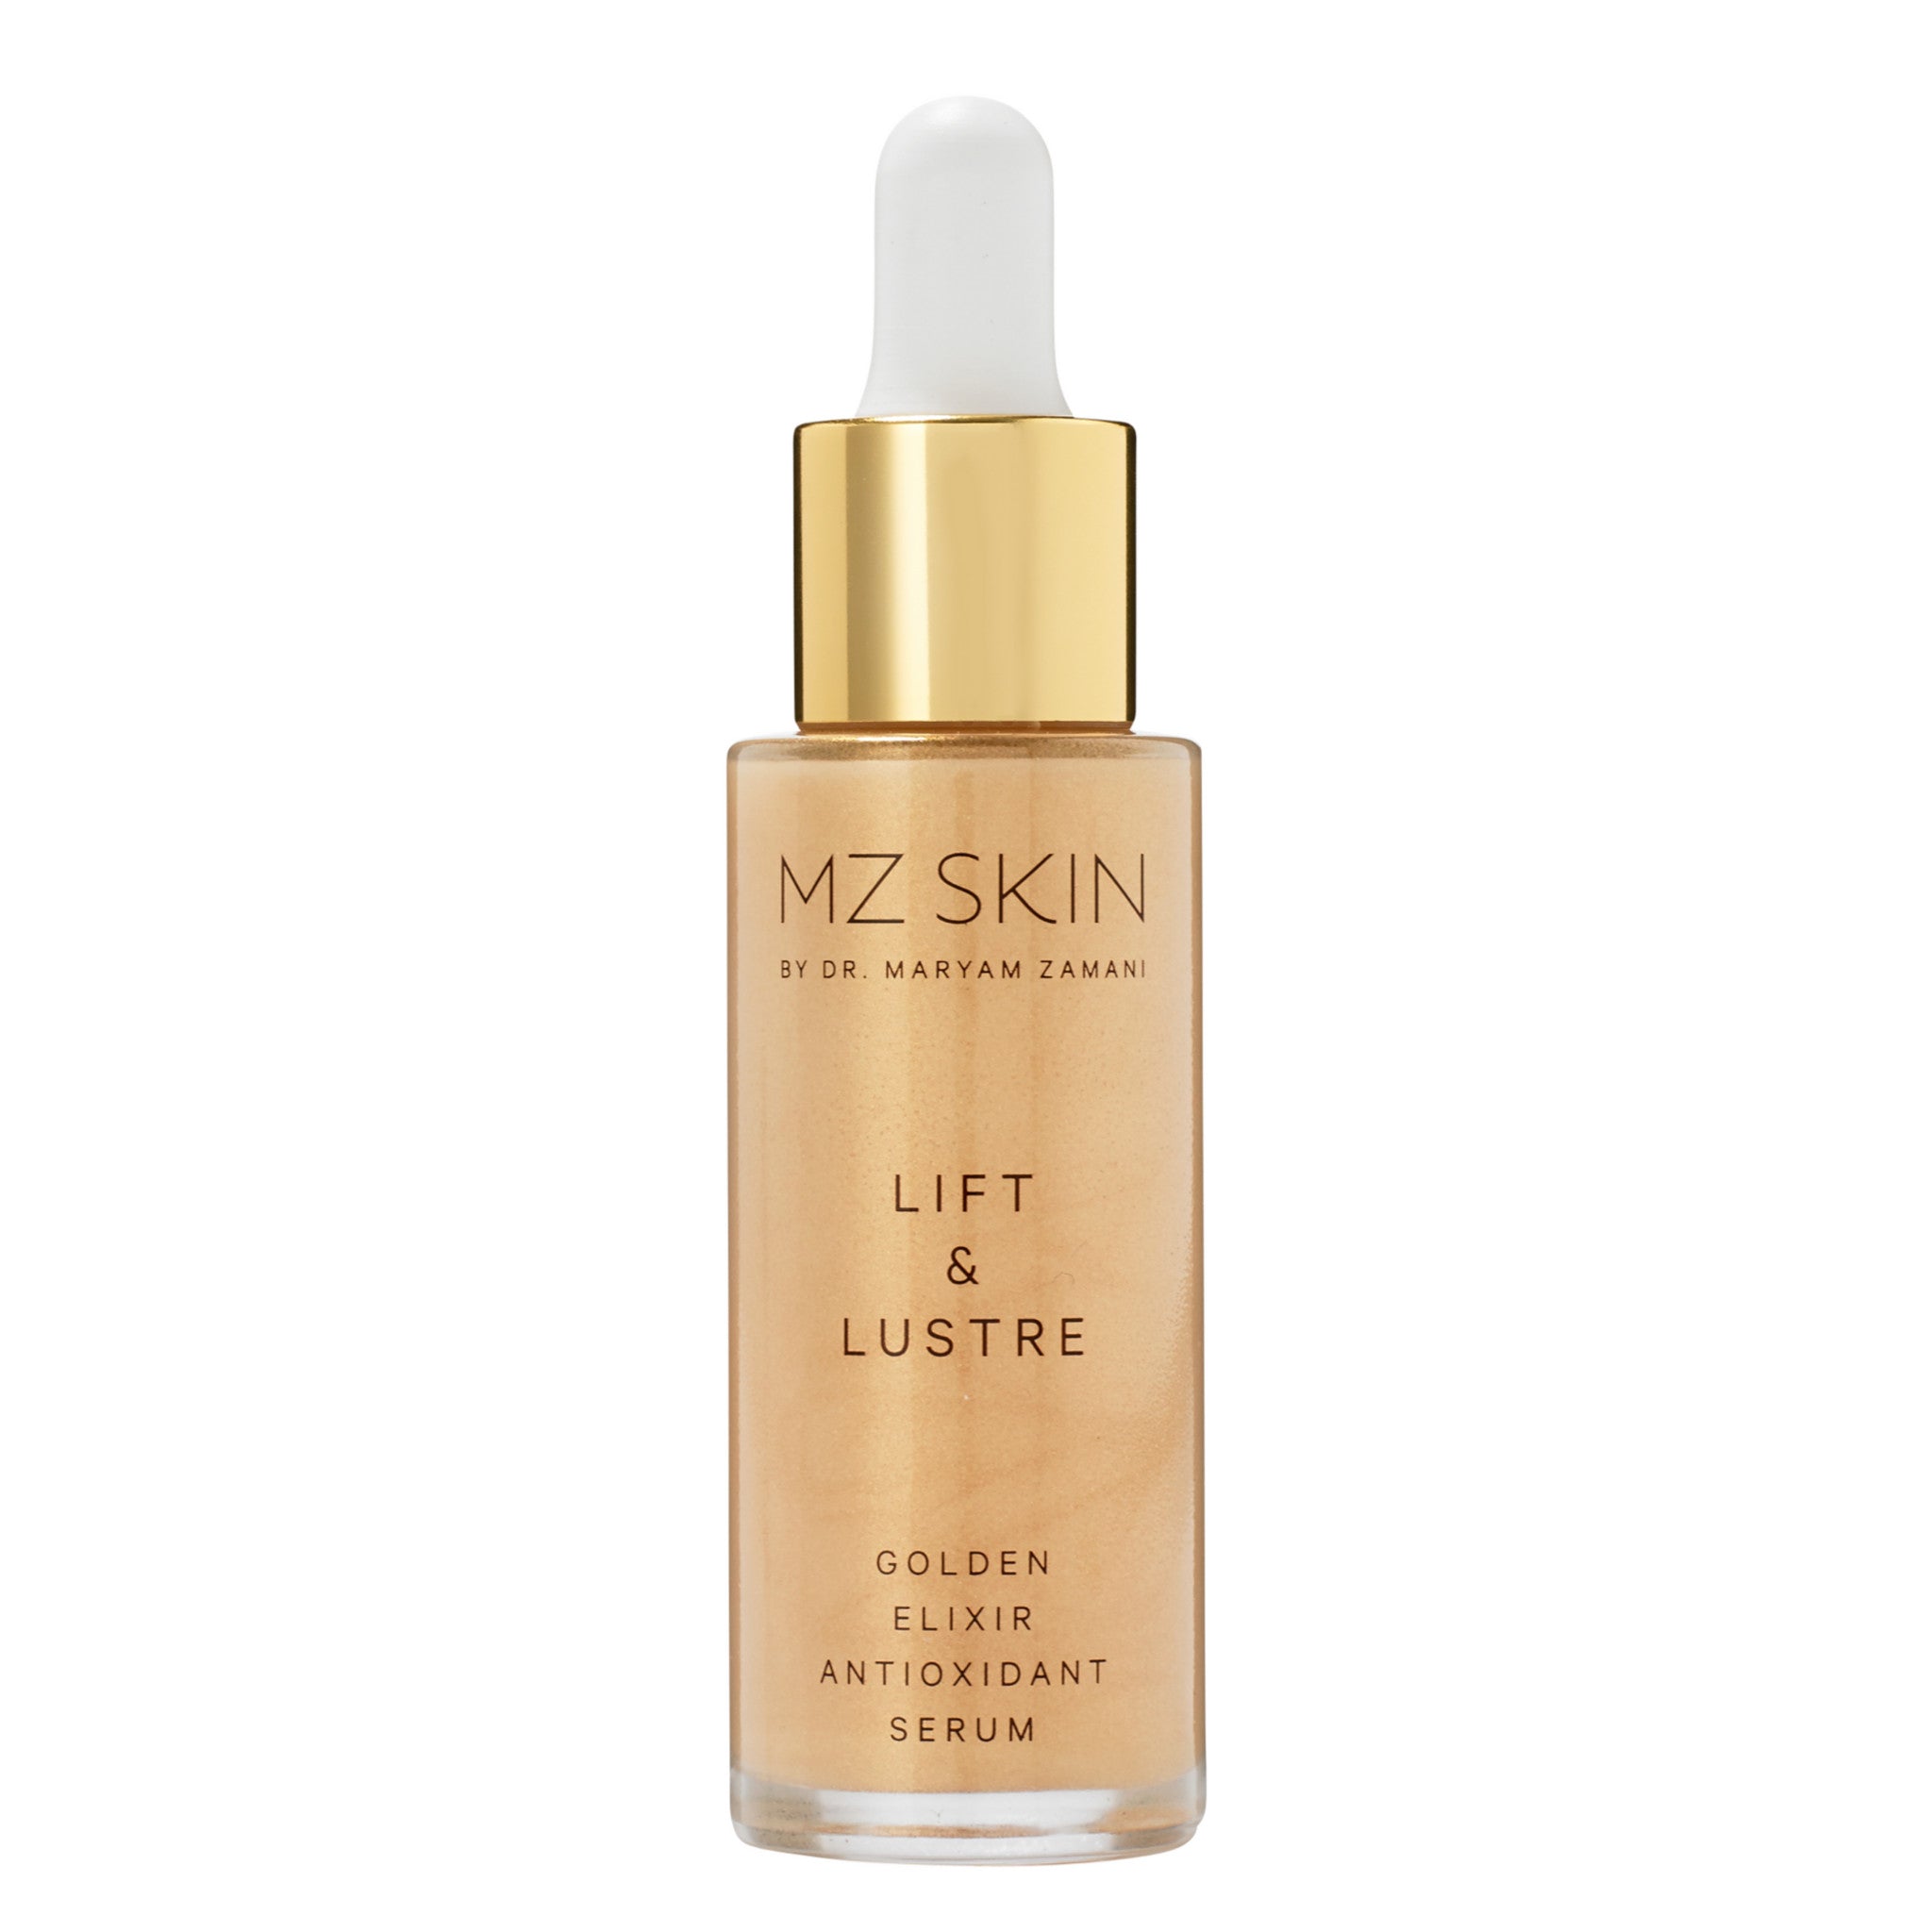 MZ Skin Lift and Lustre Golden Elixir Antioxidant Serum main image.